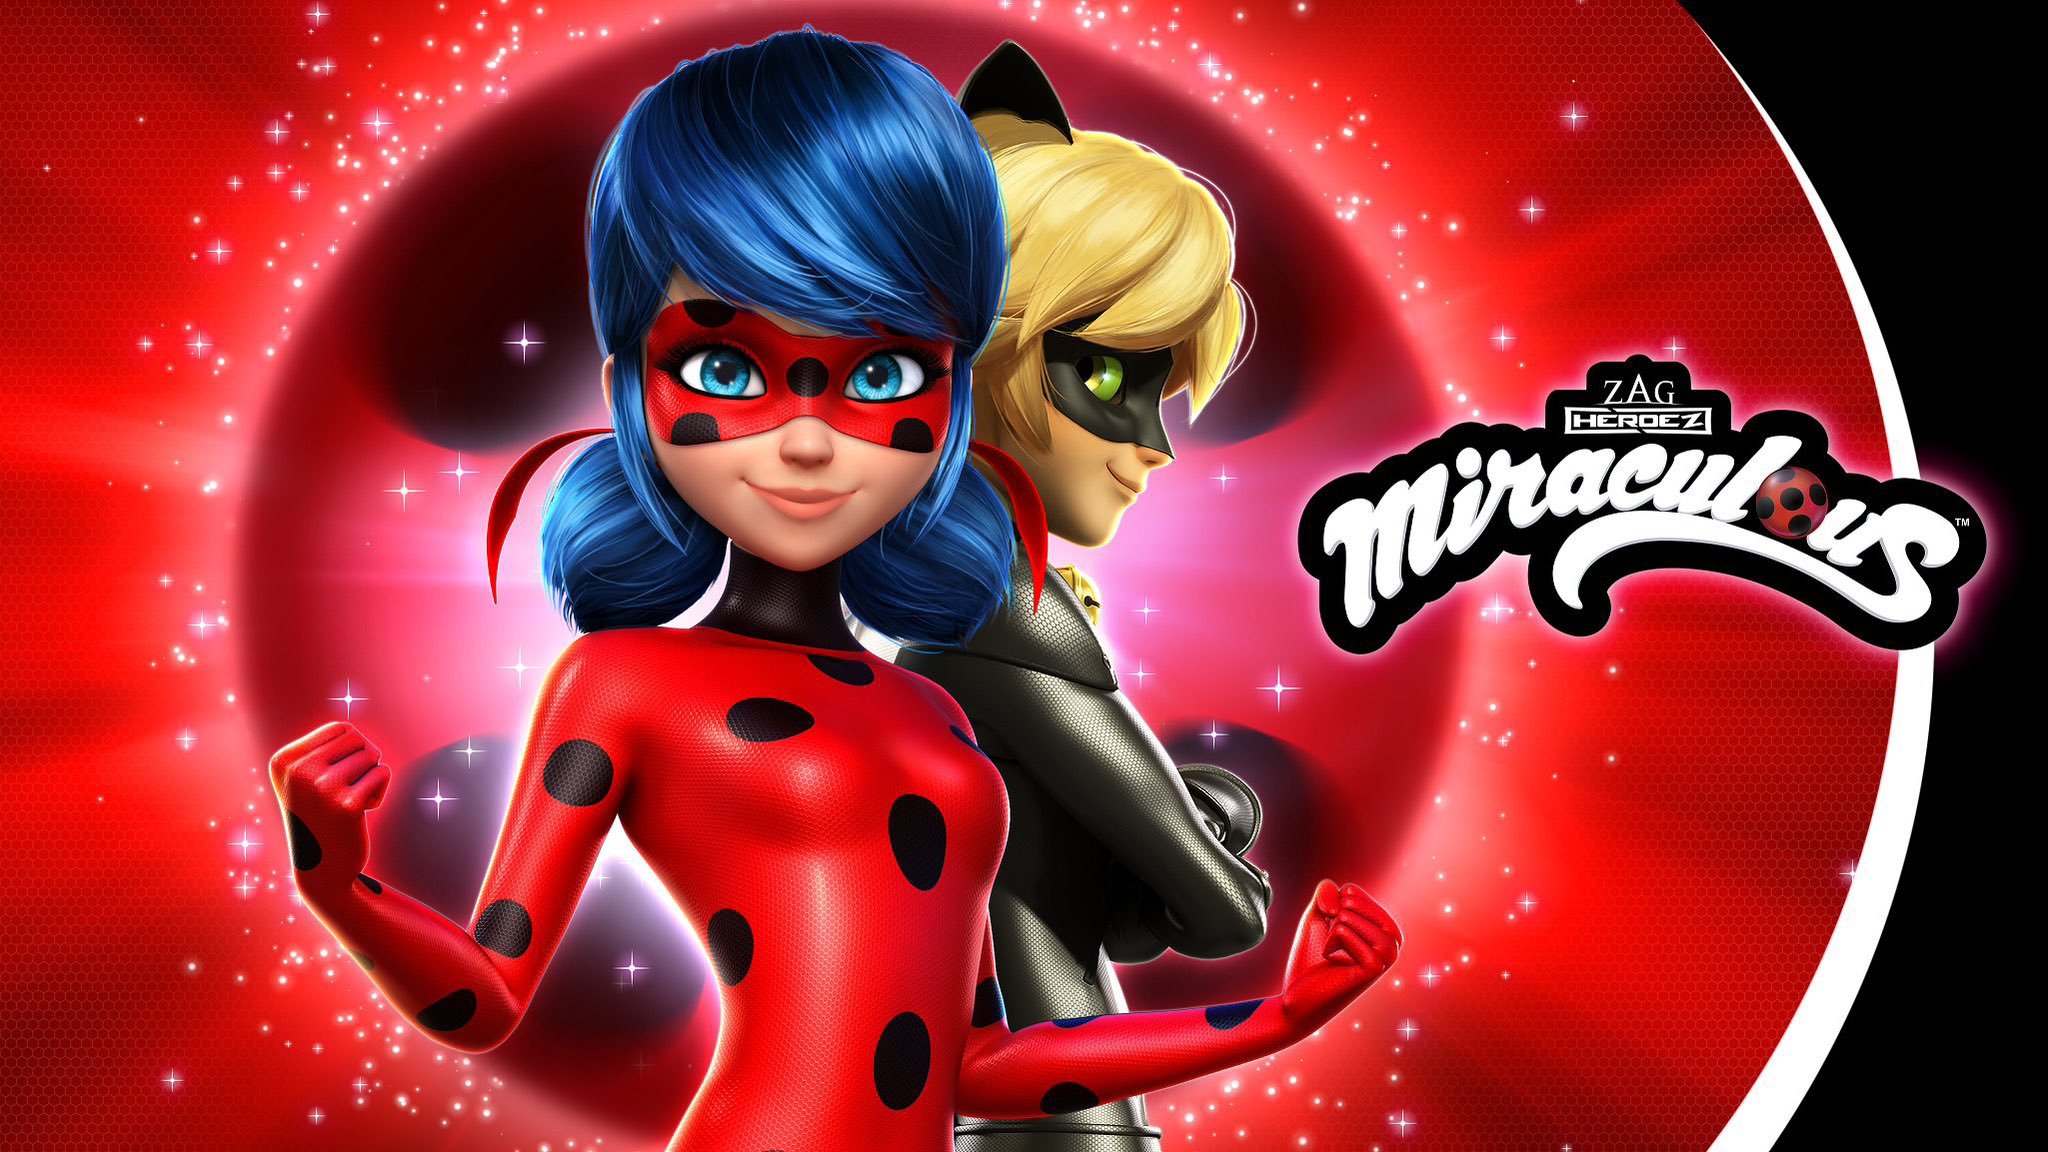 When Is Miraculous: Tales Of Ladybug & Cat Noir Season 5 on Disney Plus